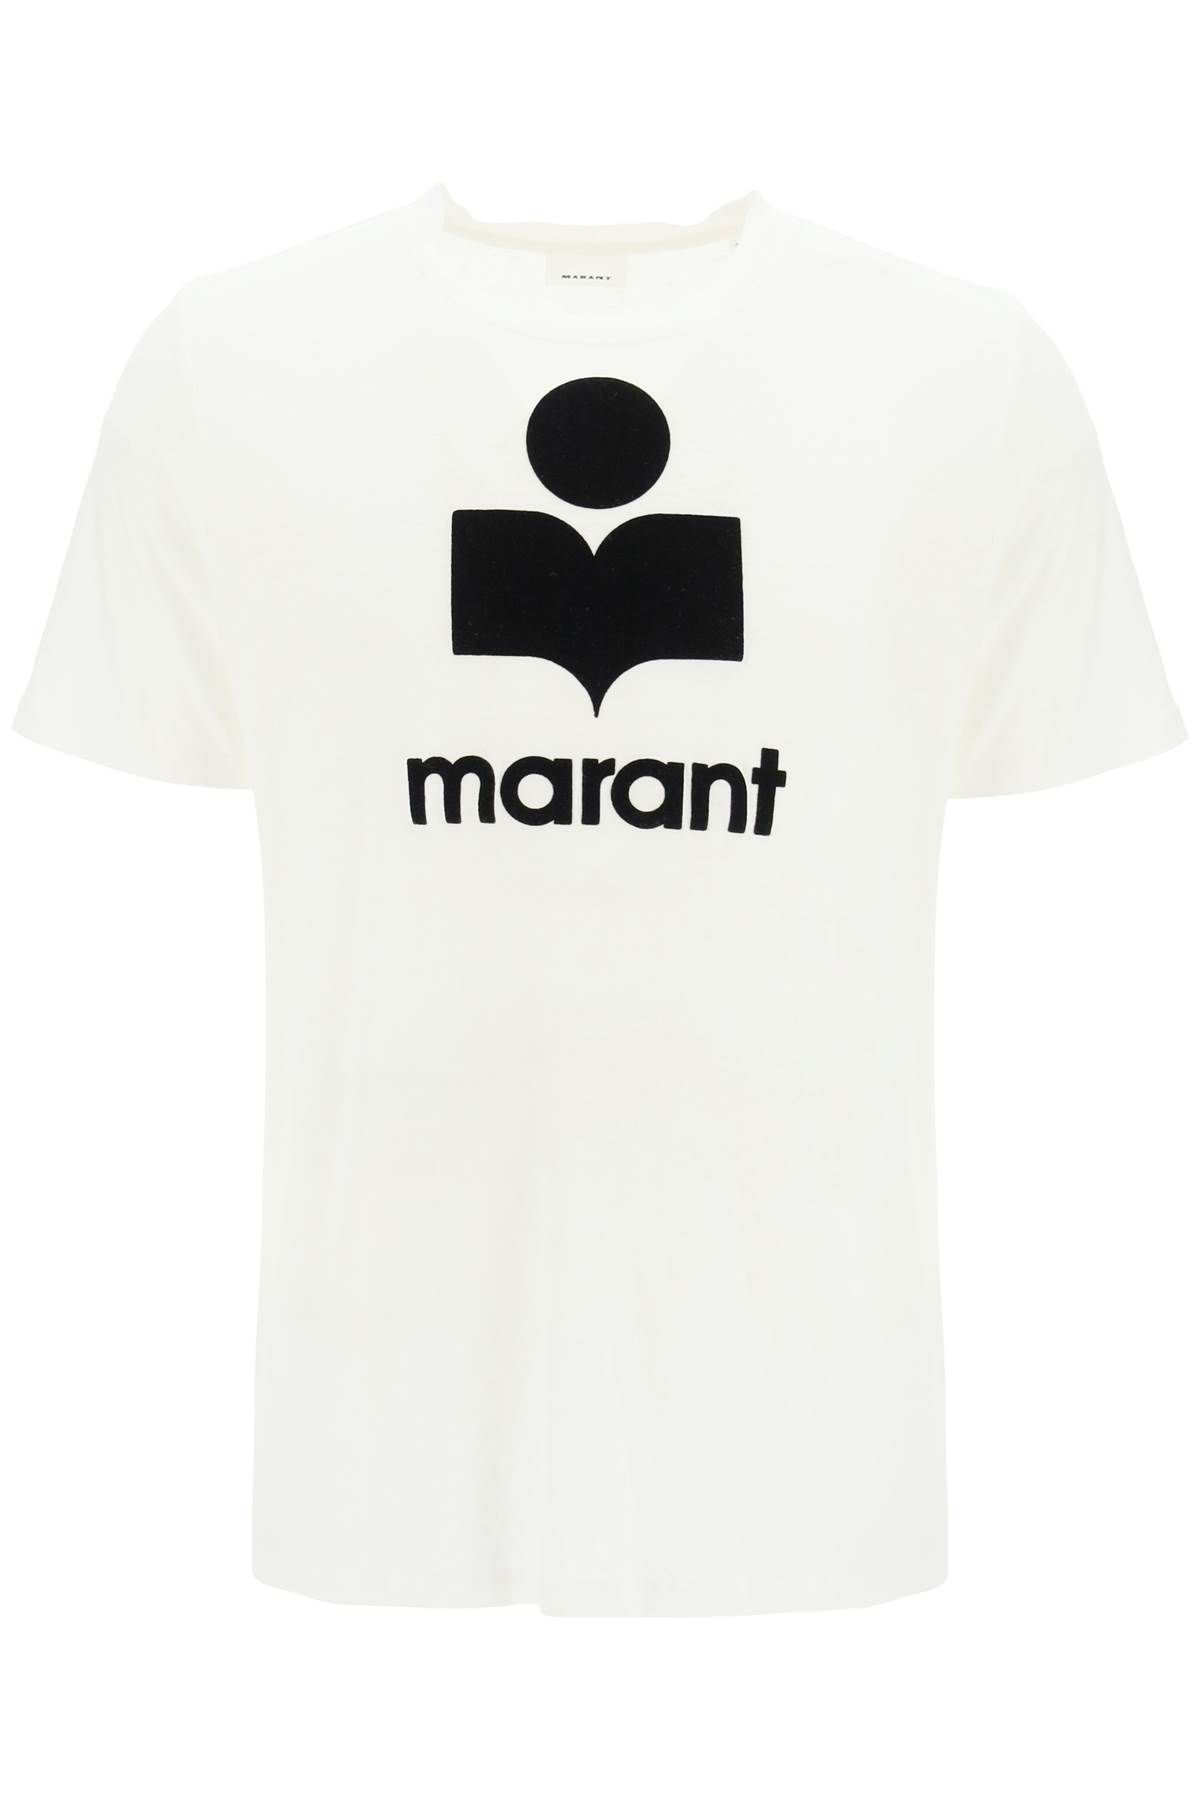  MARANT karman linen logo t-shirt